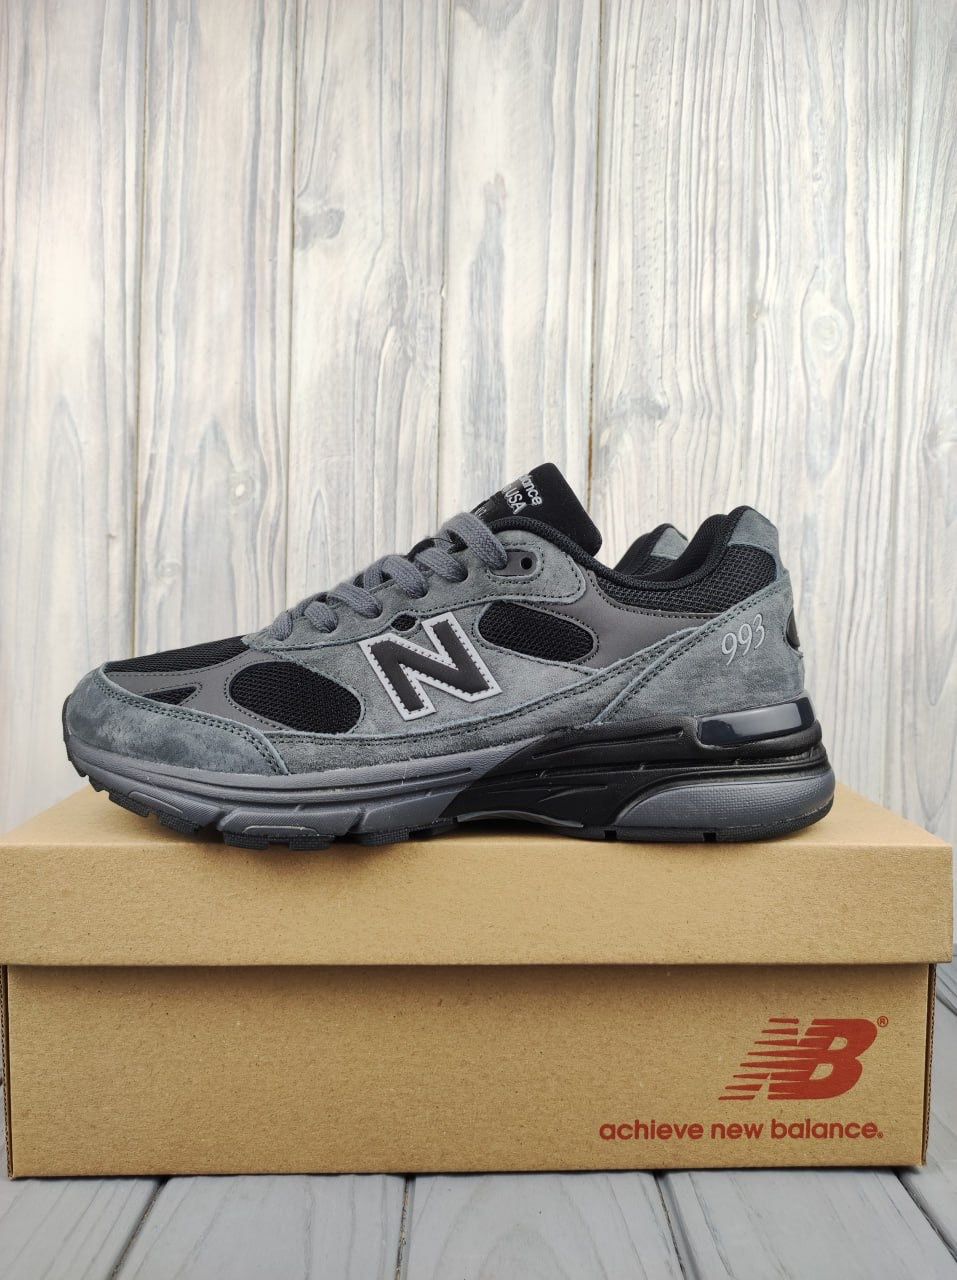 New Balance 993 Gray Black